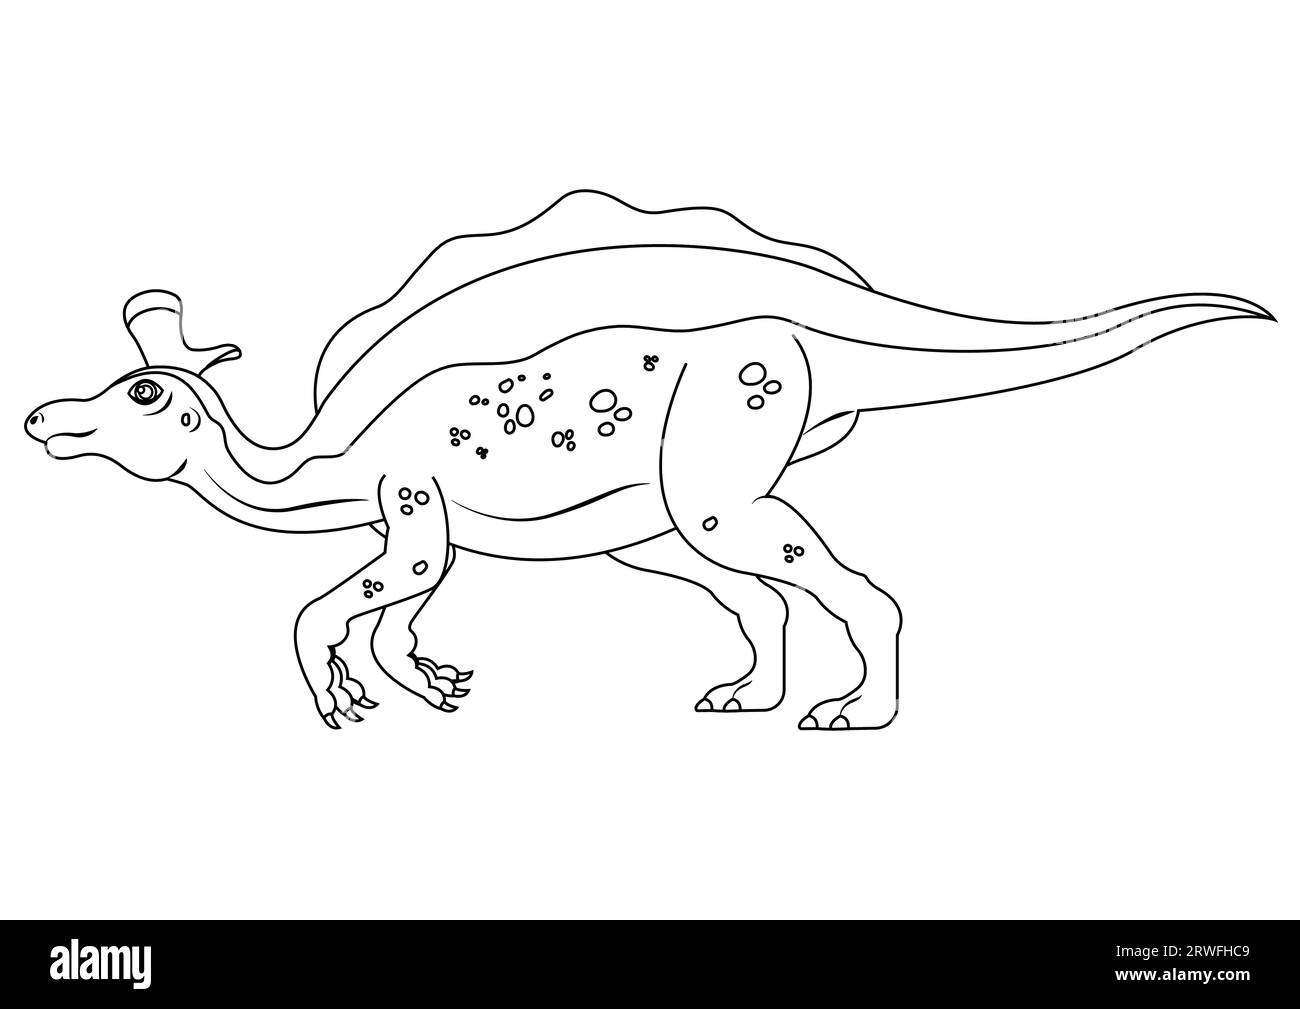 Noir et blanc Lambeosaurus Dinosaur Cartoon Character Vector. Coloriage d'un dinosaure Lambeosaurus Illustration de Vecteur